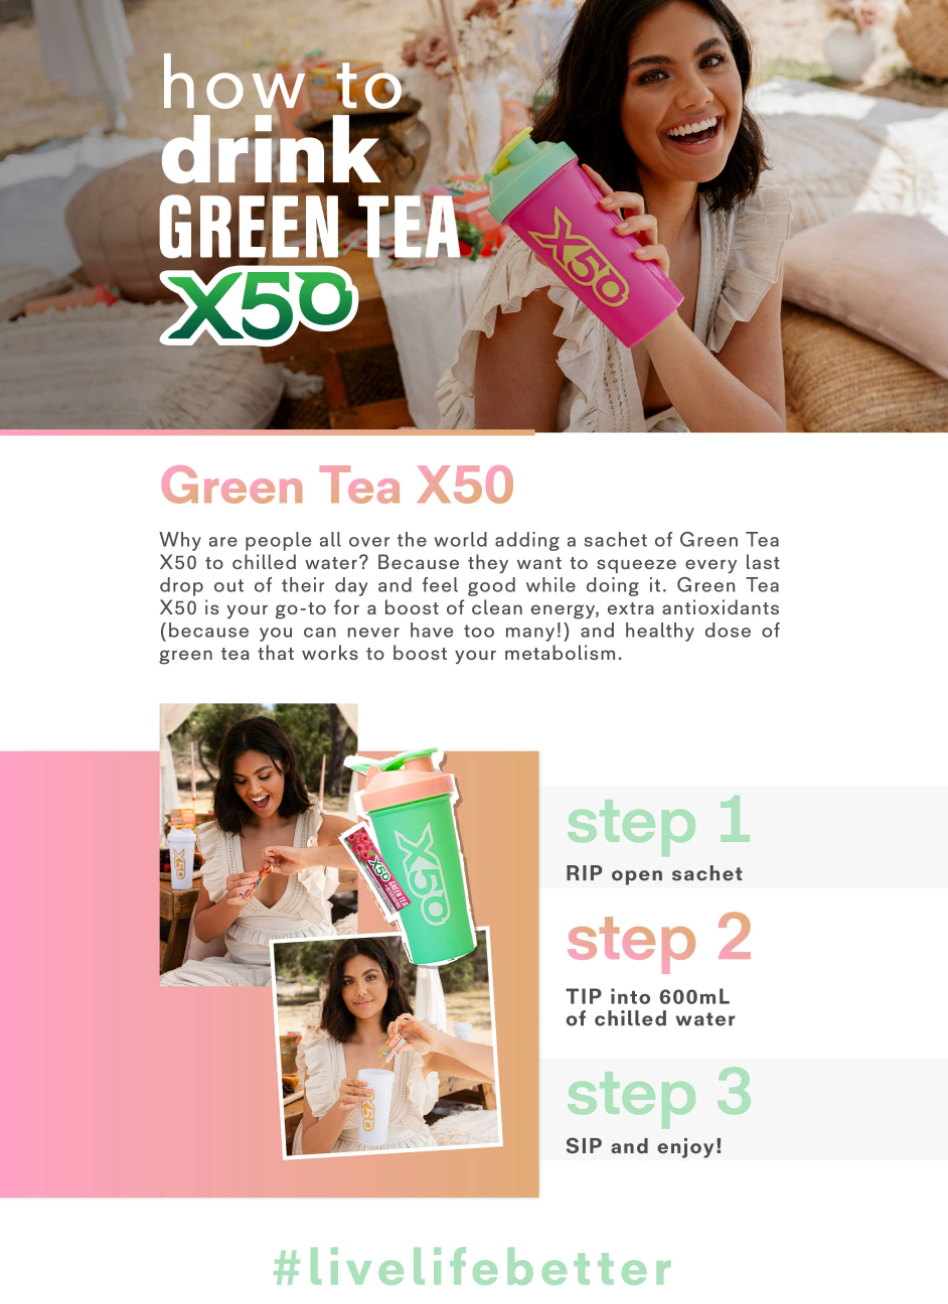 How to Drink X50 Green Tea | MVMNT LMTD